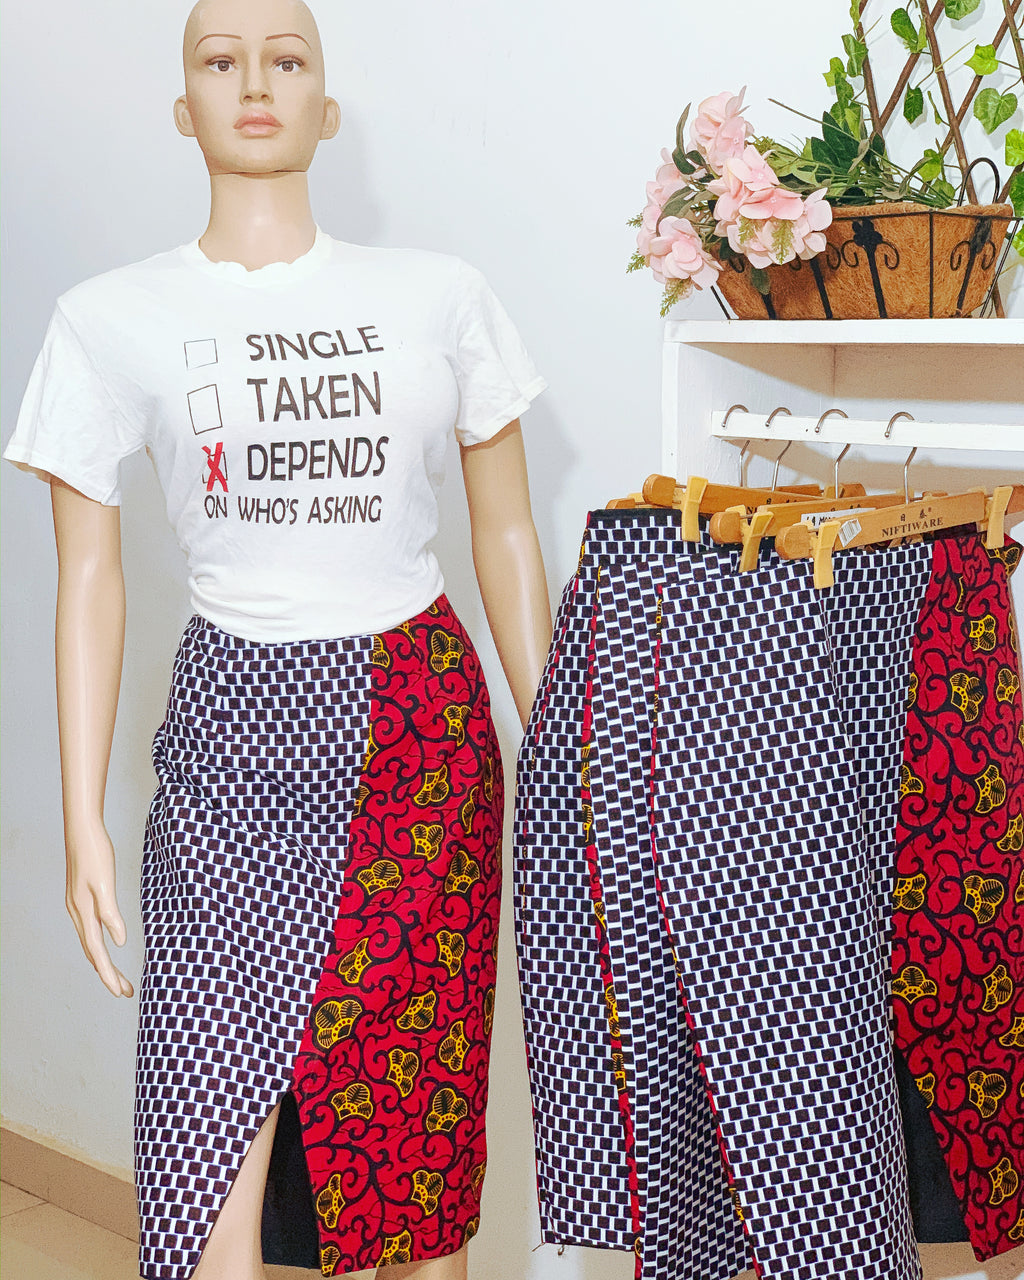 Shop Women's Skirts Online on Sale at a la mode